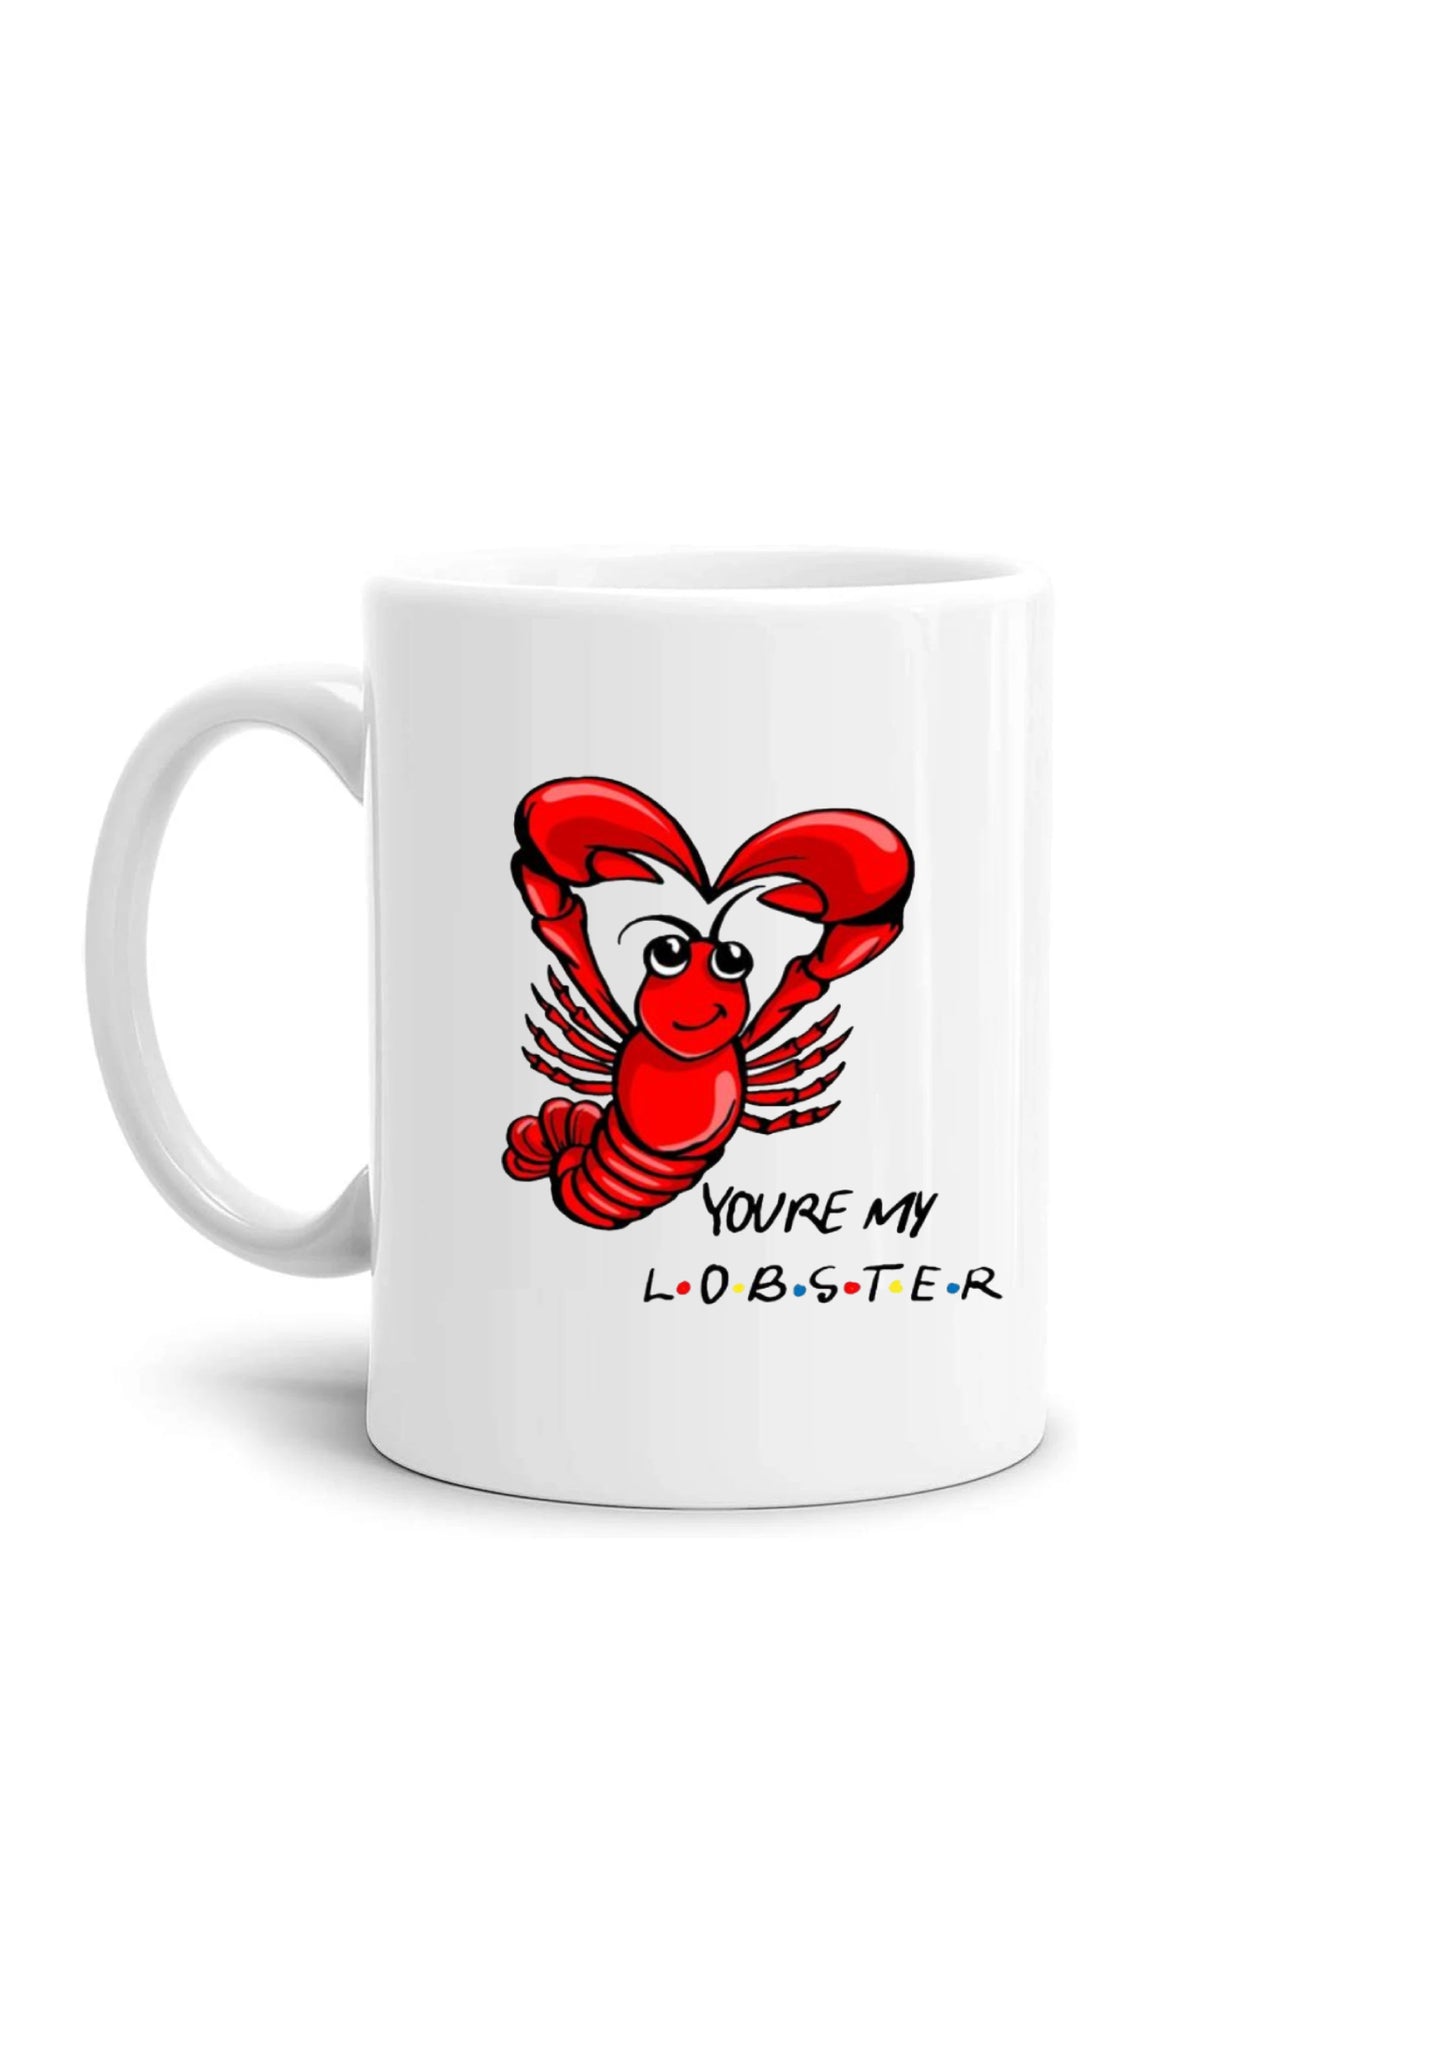 Mug- you re my lobster mug